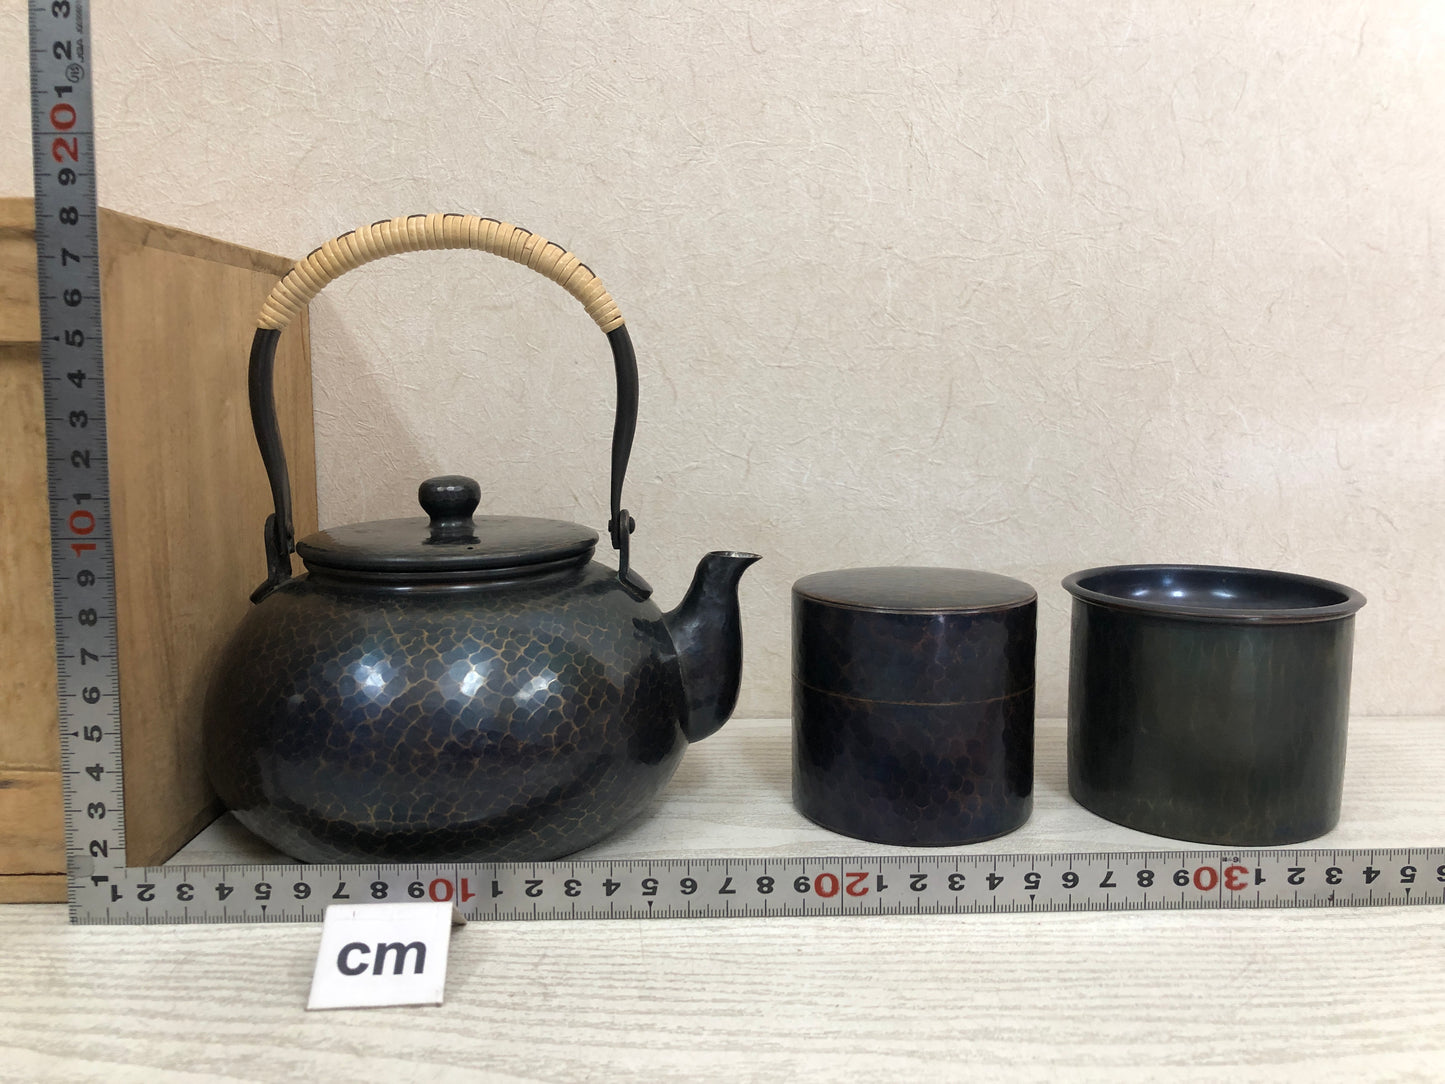 Y3857 KENSUI Gyokusendo tea utensils set signed box Japan Tea Ceremony antique